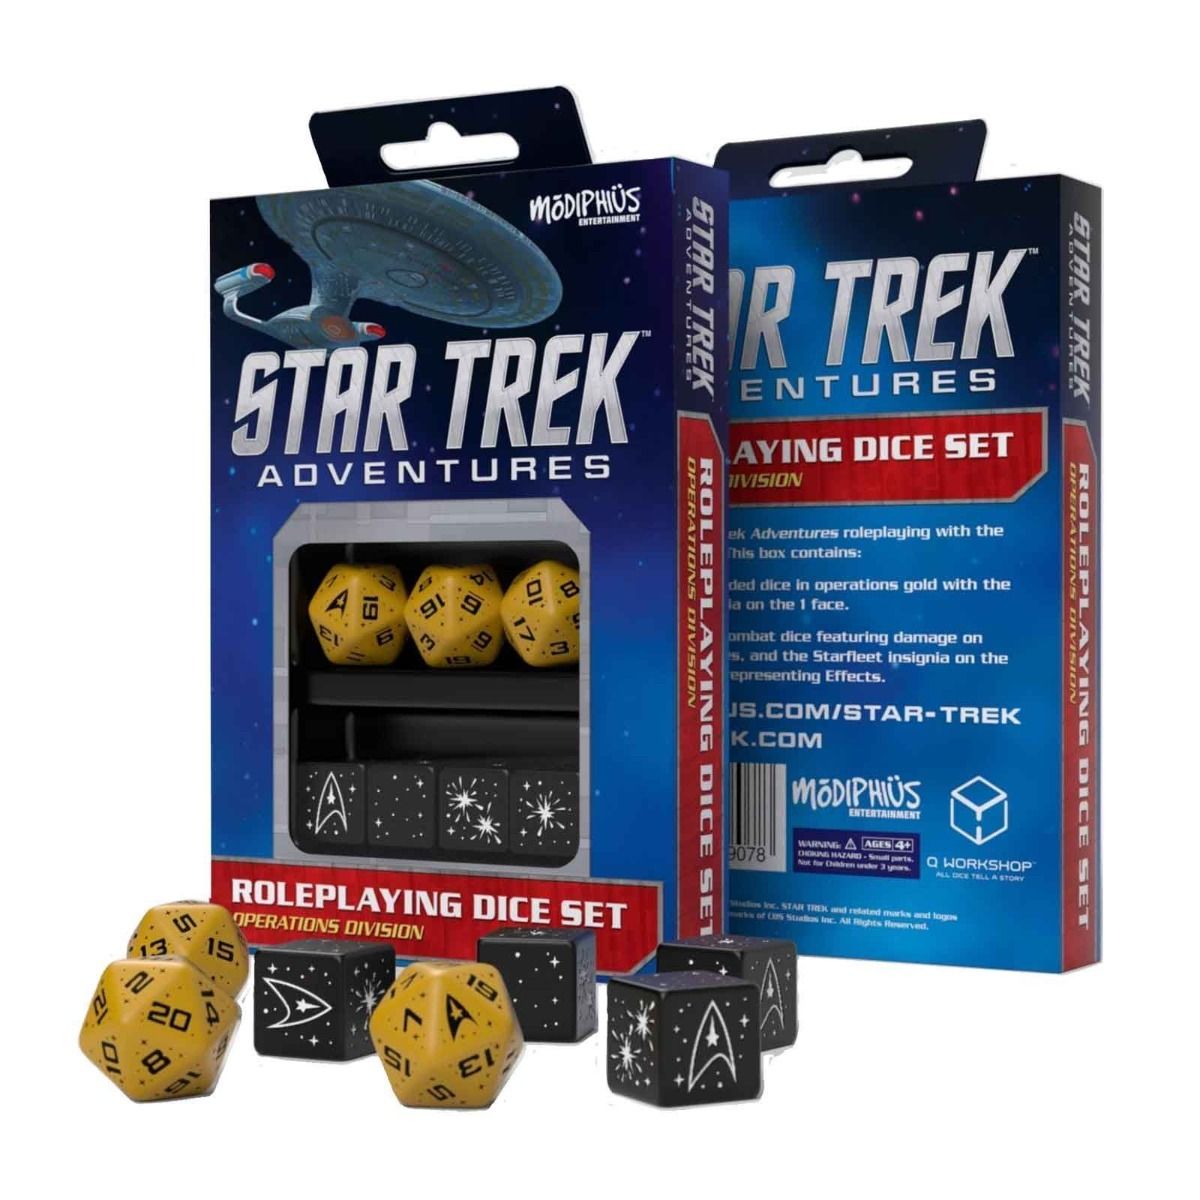 Star Trek Adventures Operations Division Dice Set Revised